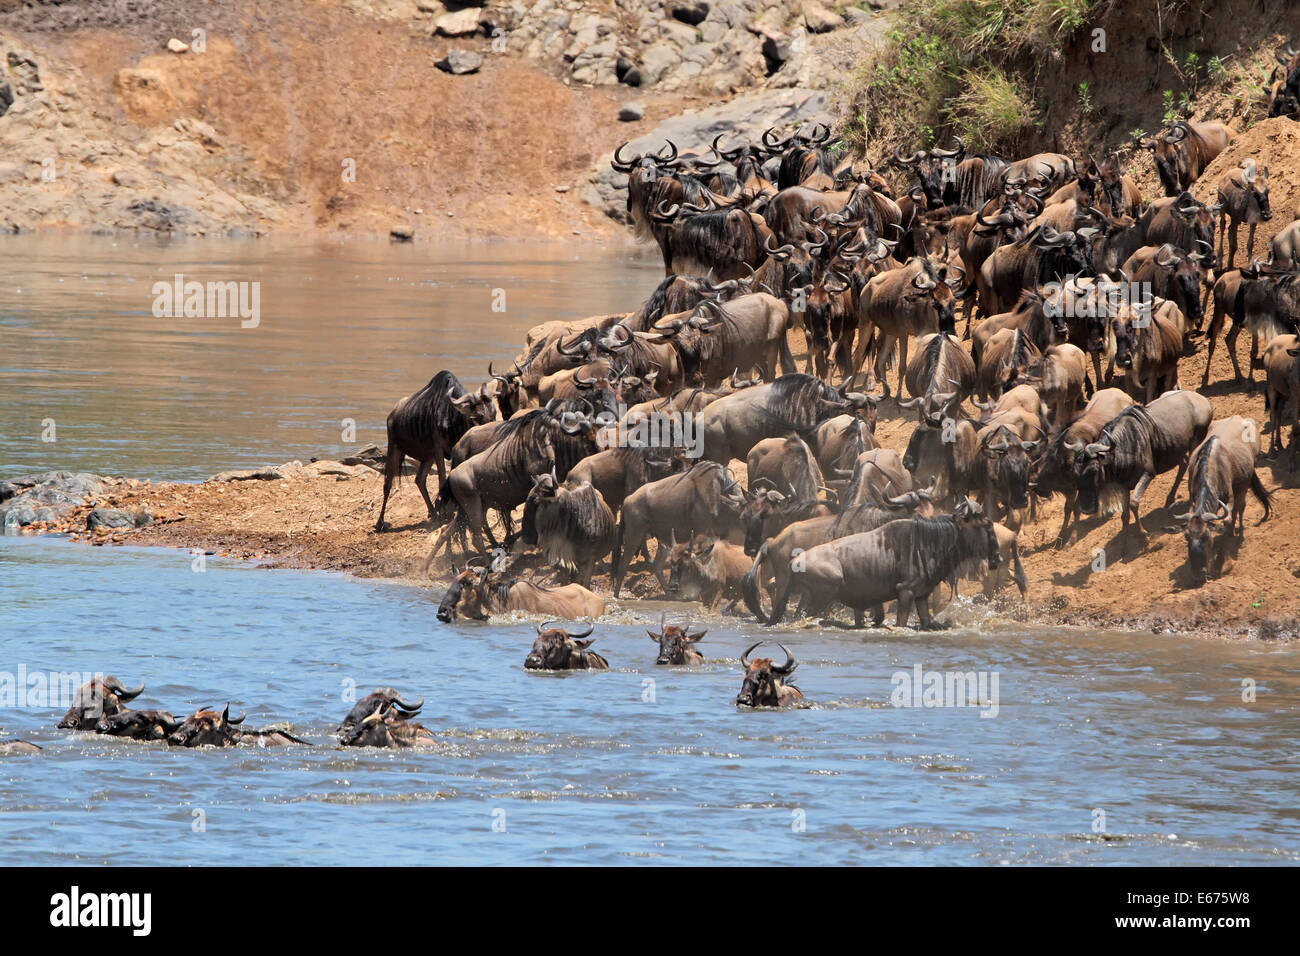 Blu migratori GNU (Connochaetes taurinus) attraversando il fiume Mara, il Masai Mara riserva nazionale, Kenya Foto Stock